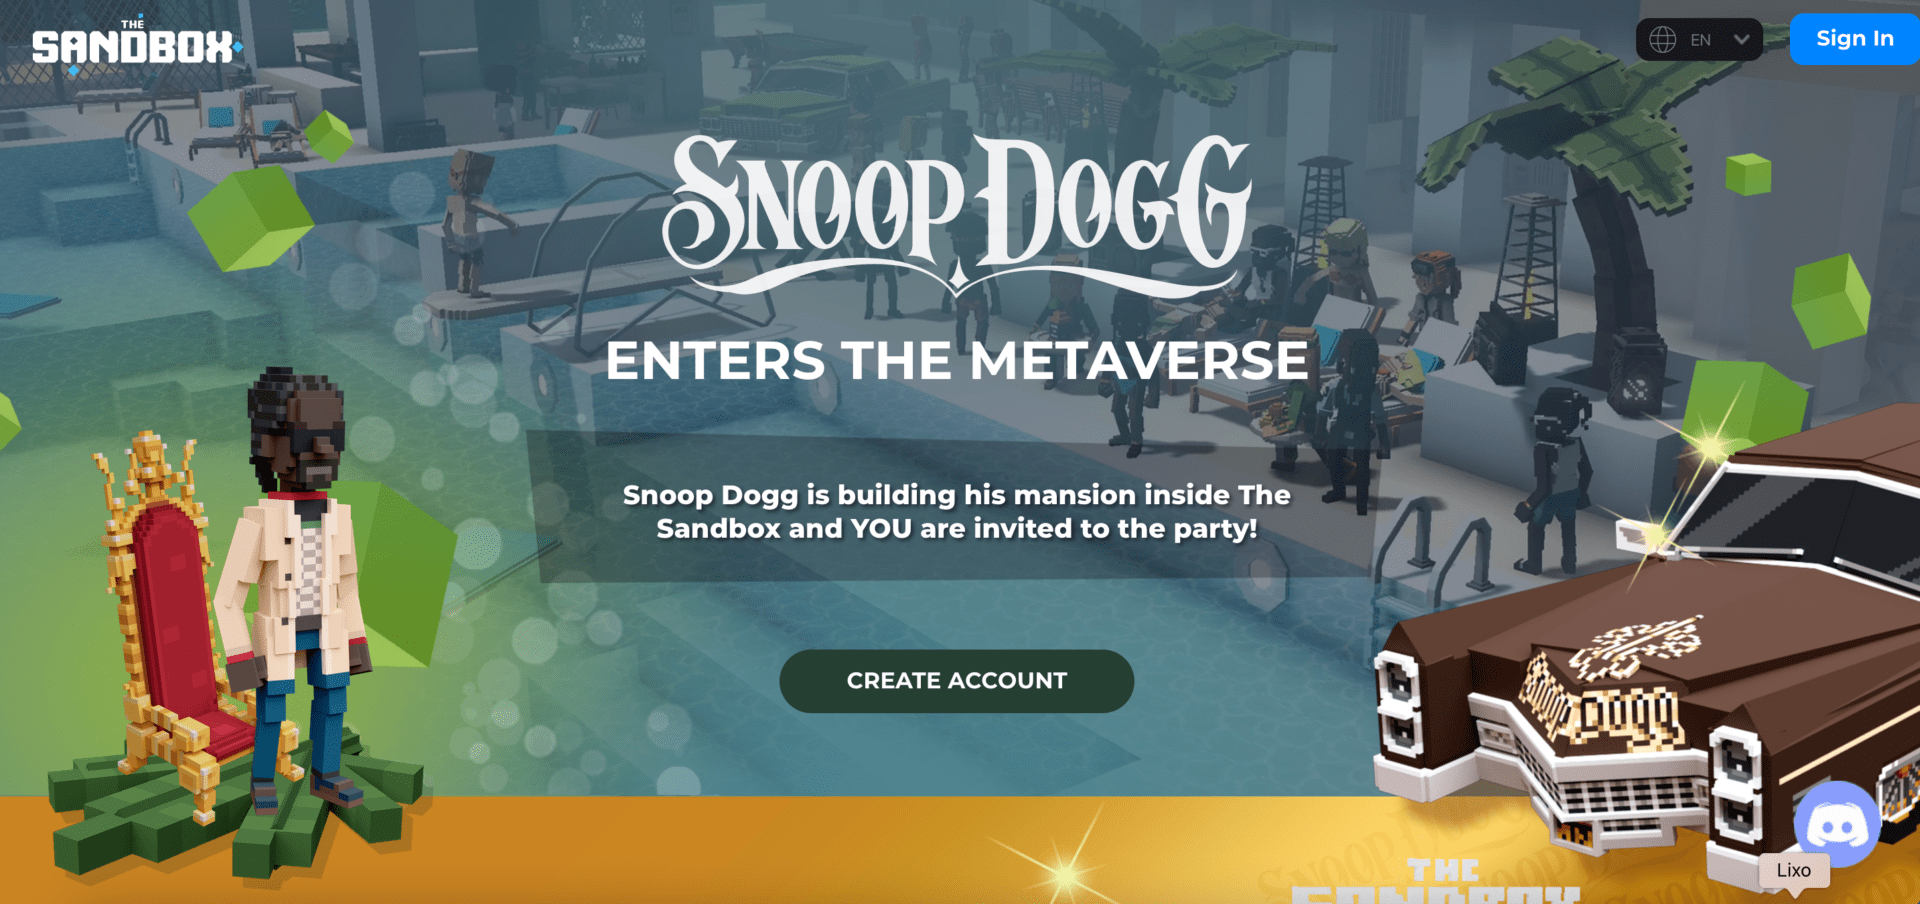 Snoop Dogg no metaverso Sandbox